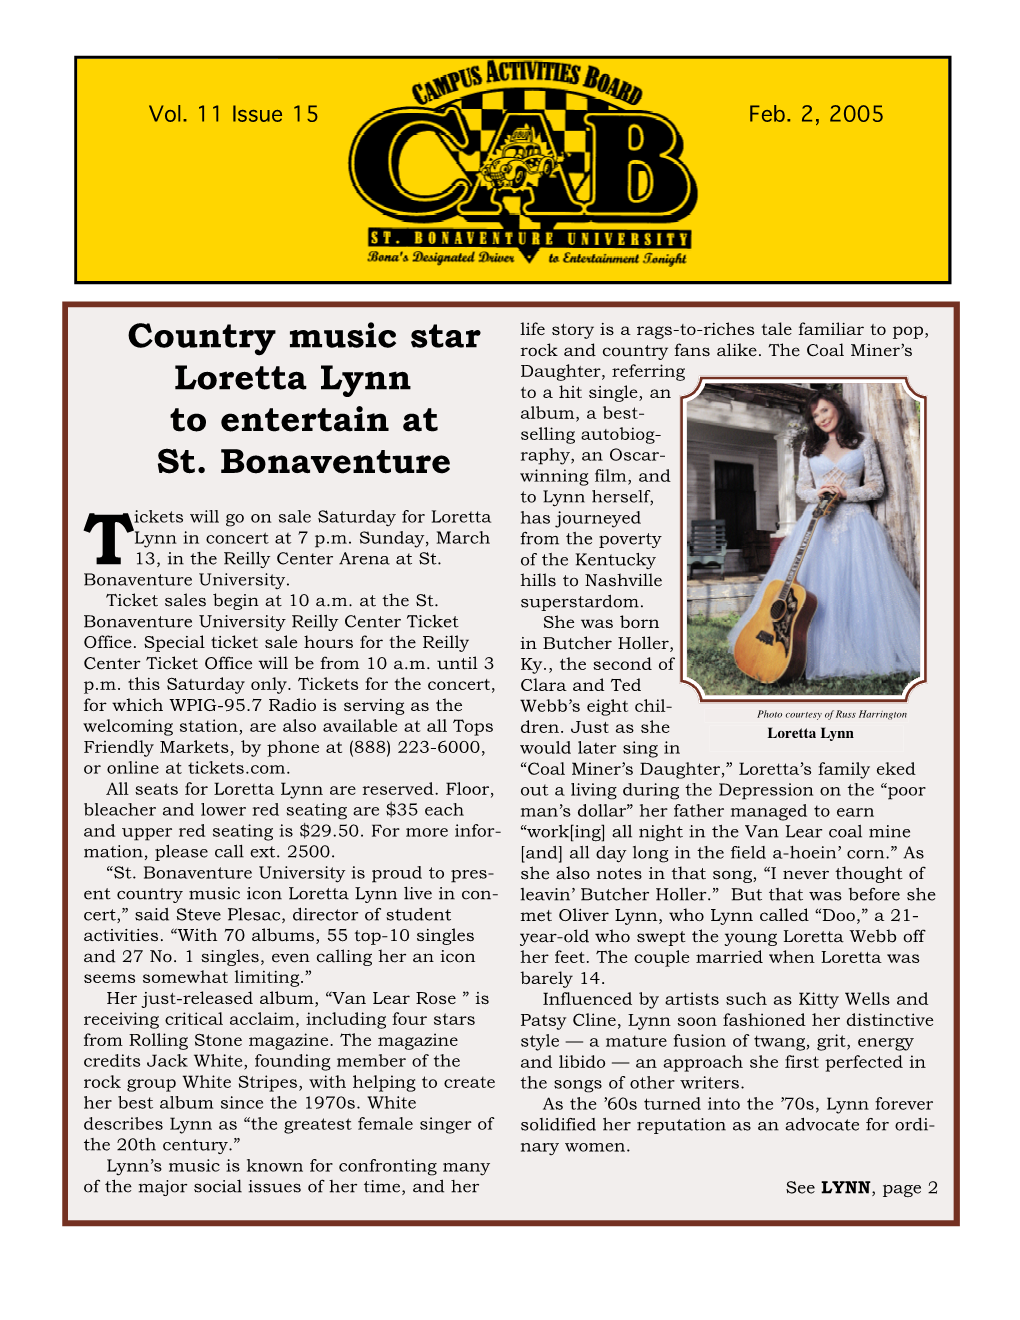 Country Music Star Loretta Lynn to Entertain at St. Bonaventure